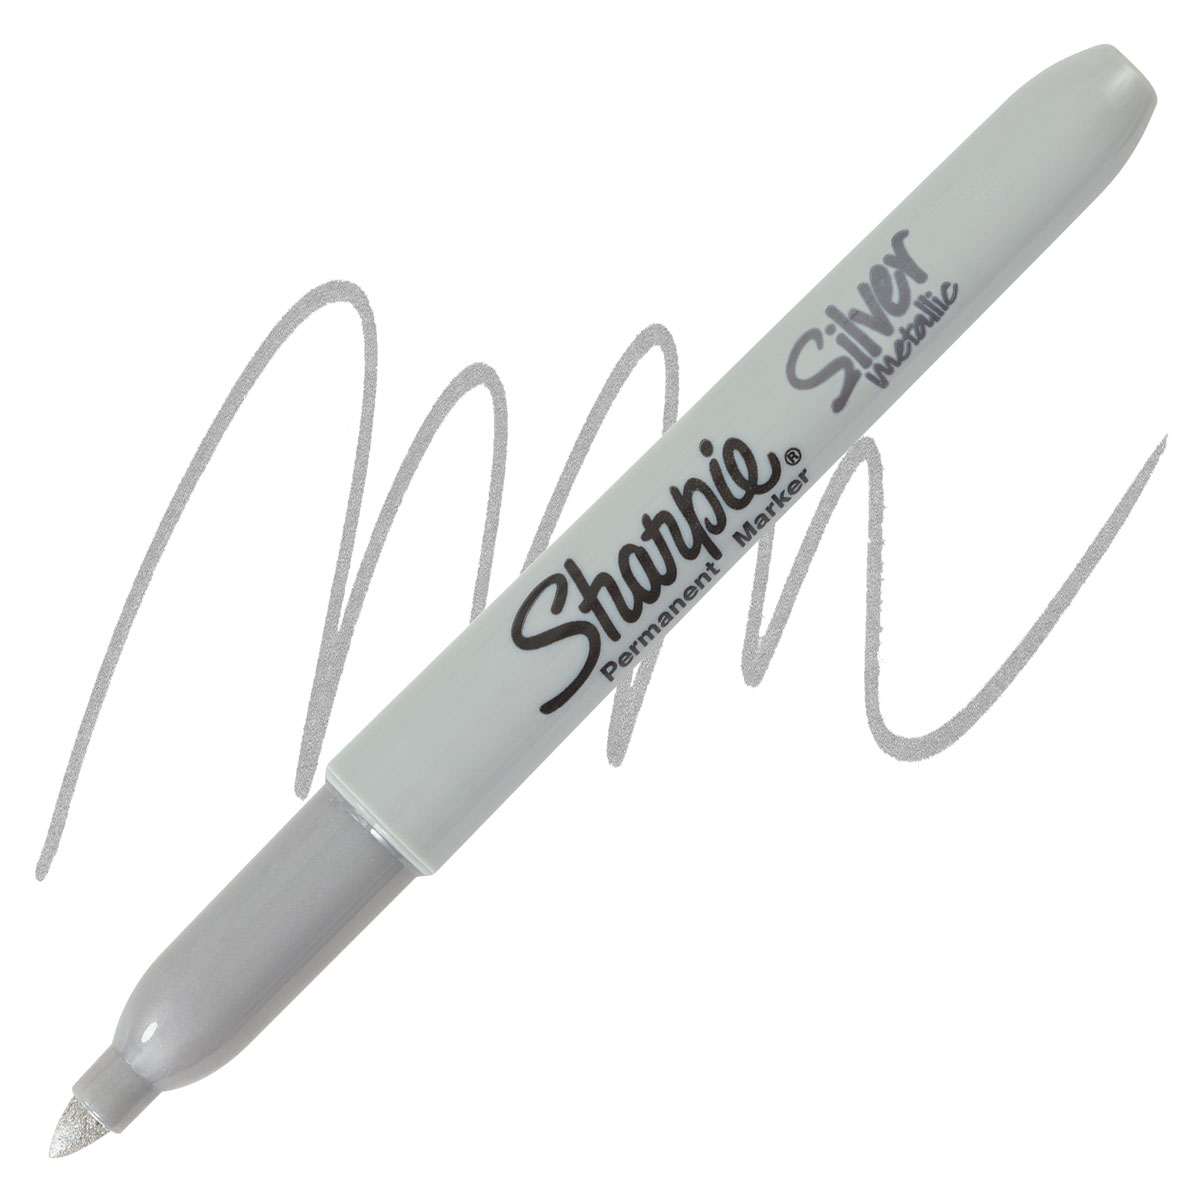 Sharpie Metallic Permanent Marker, Metallic Silver, Dozen 071641391000